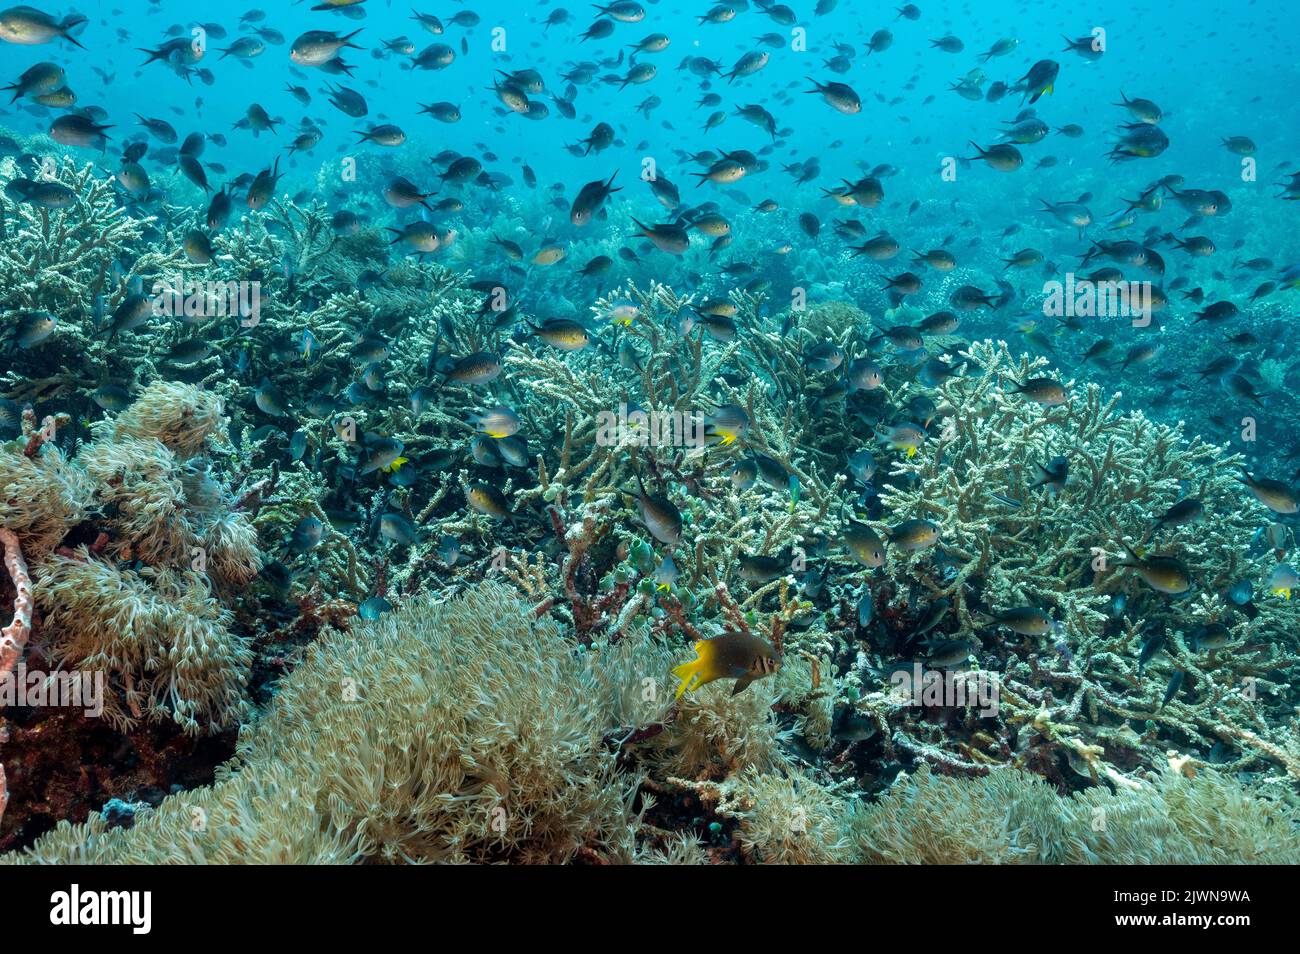 Large schools of Ternate chromis, Chromis ternatensis, over Acropora corals, Raja Ampat Indonesia. Stock Photo